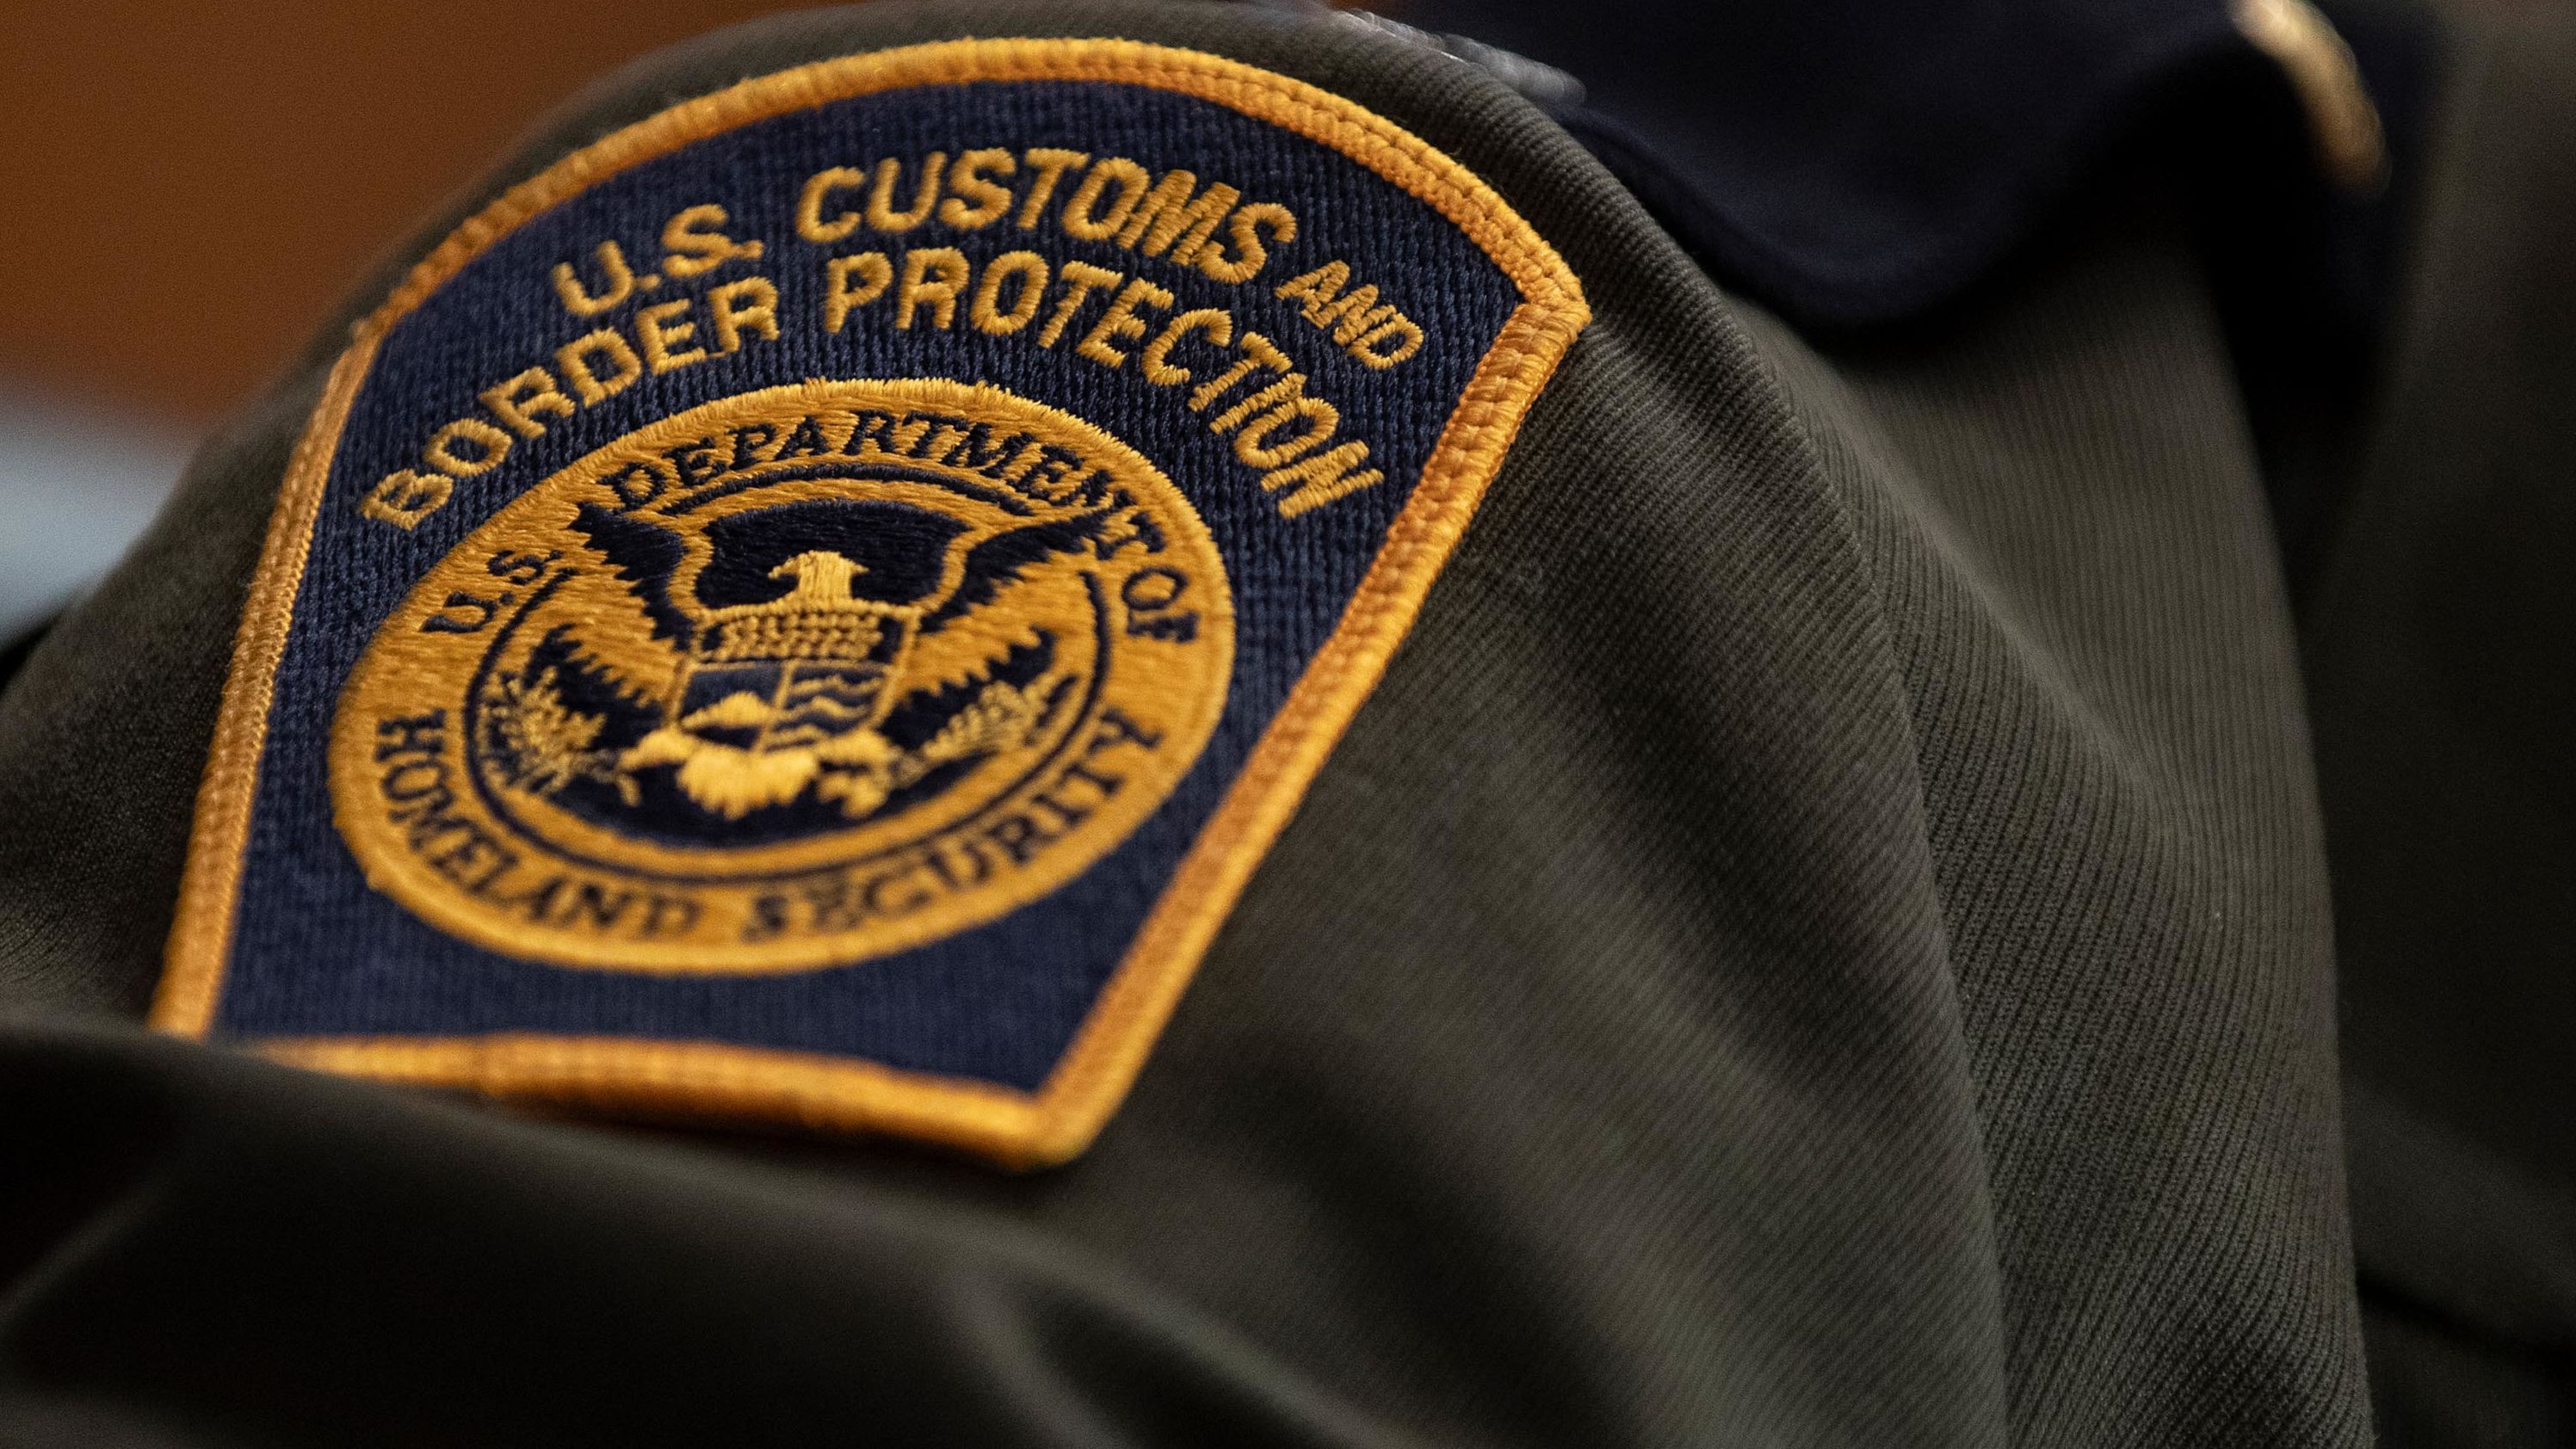 01 US Border Patrol Agent